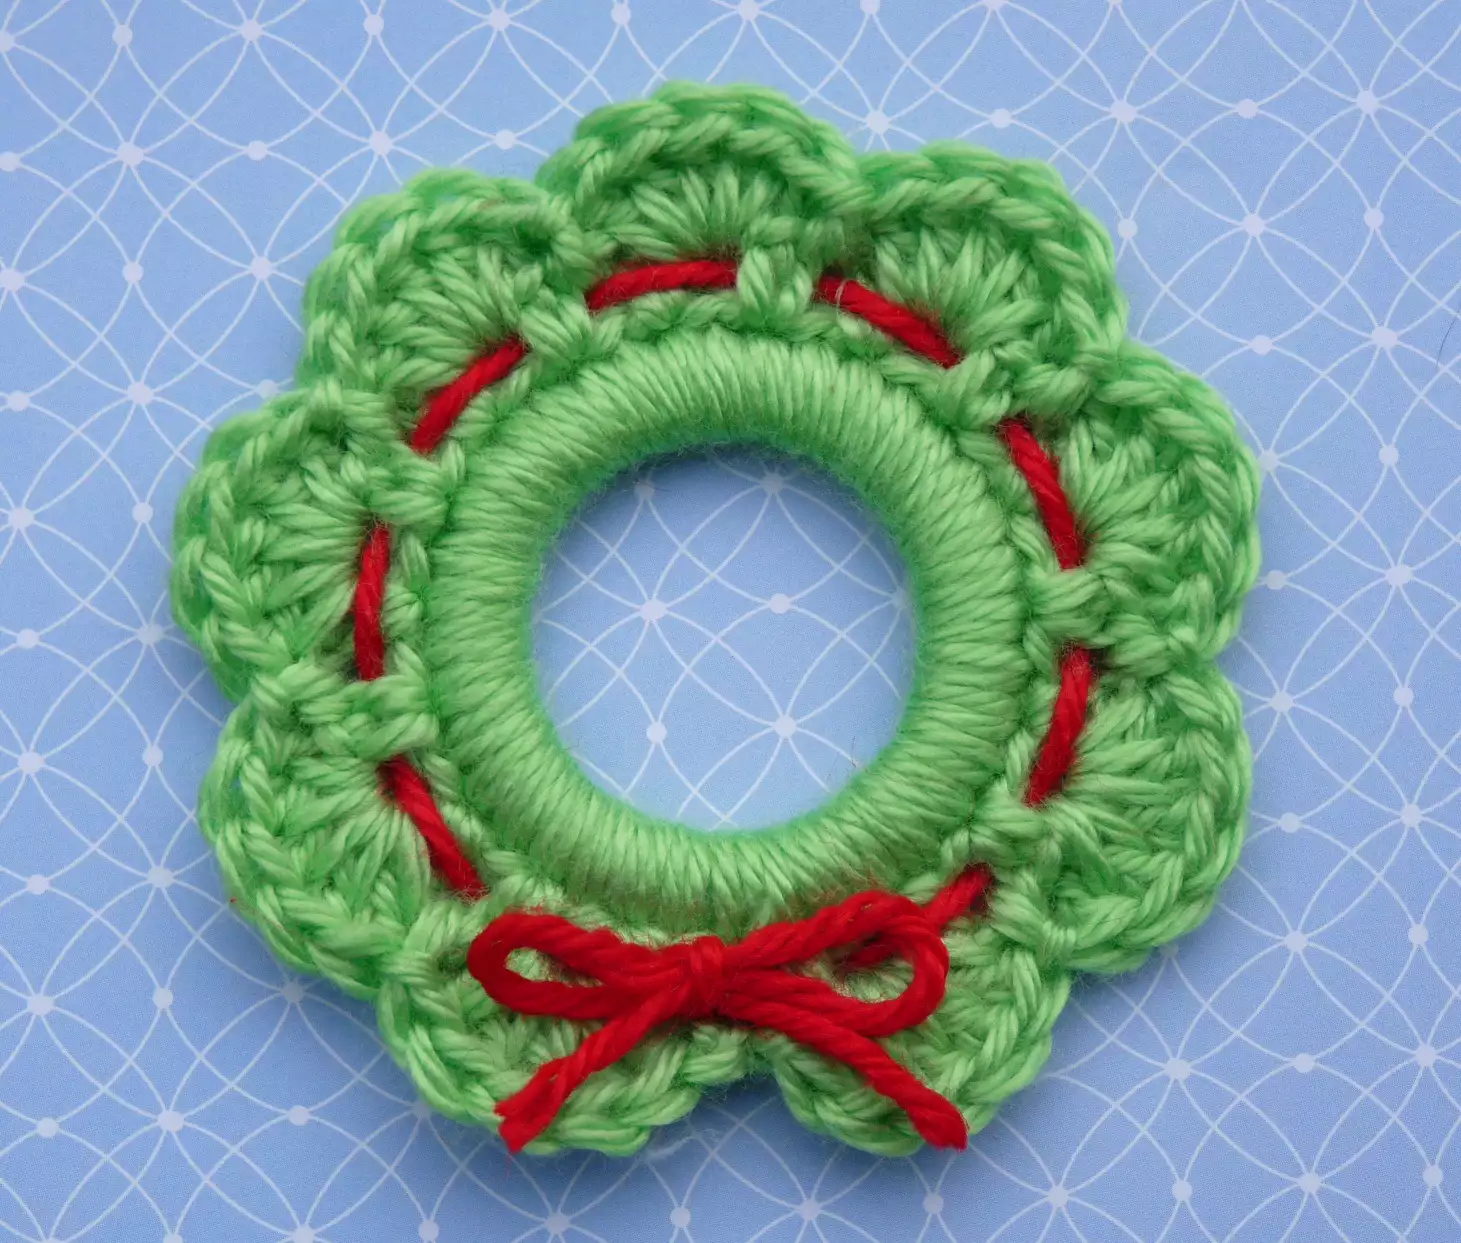 Crocheted Christmas wreath